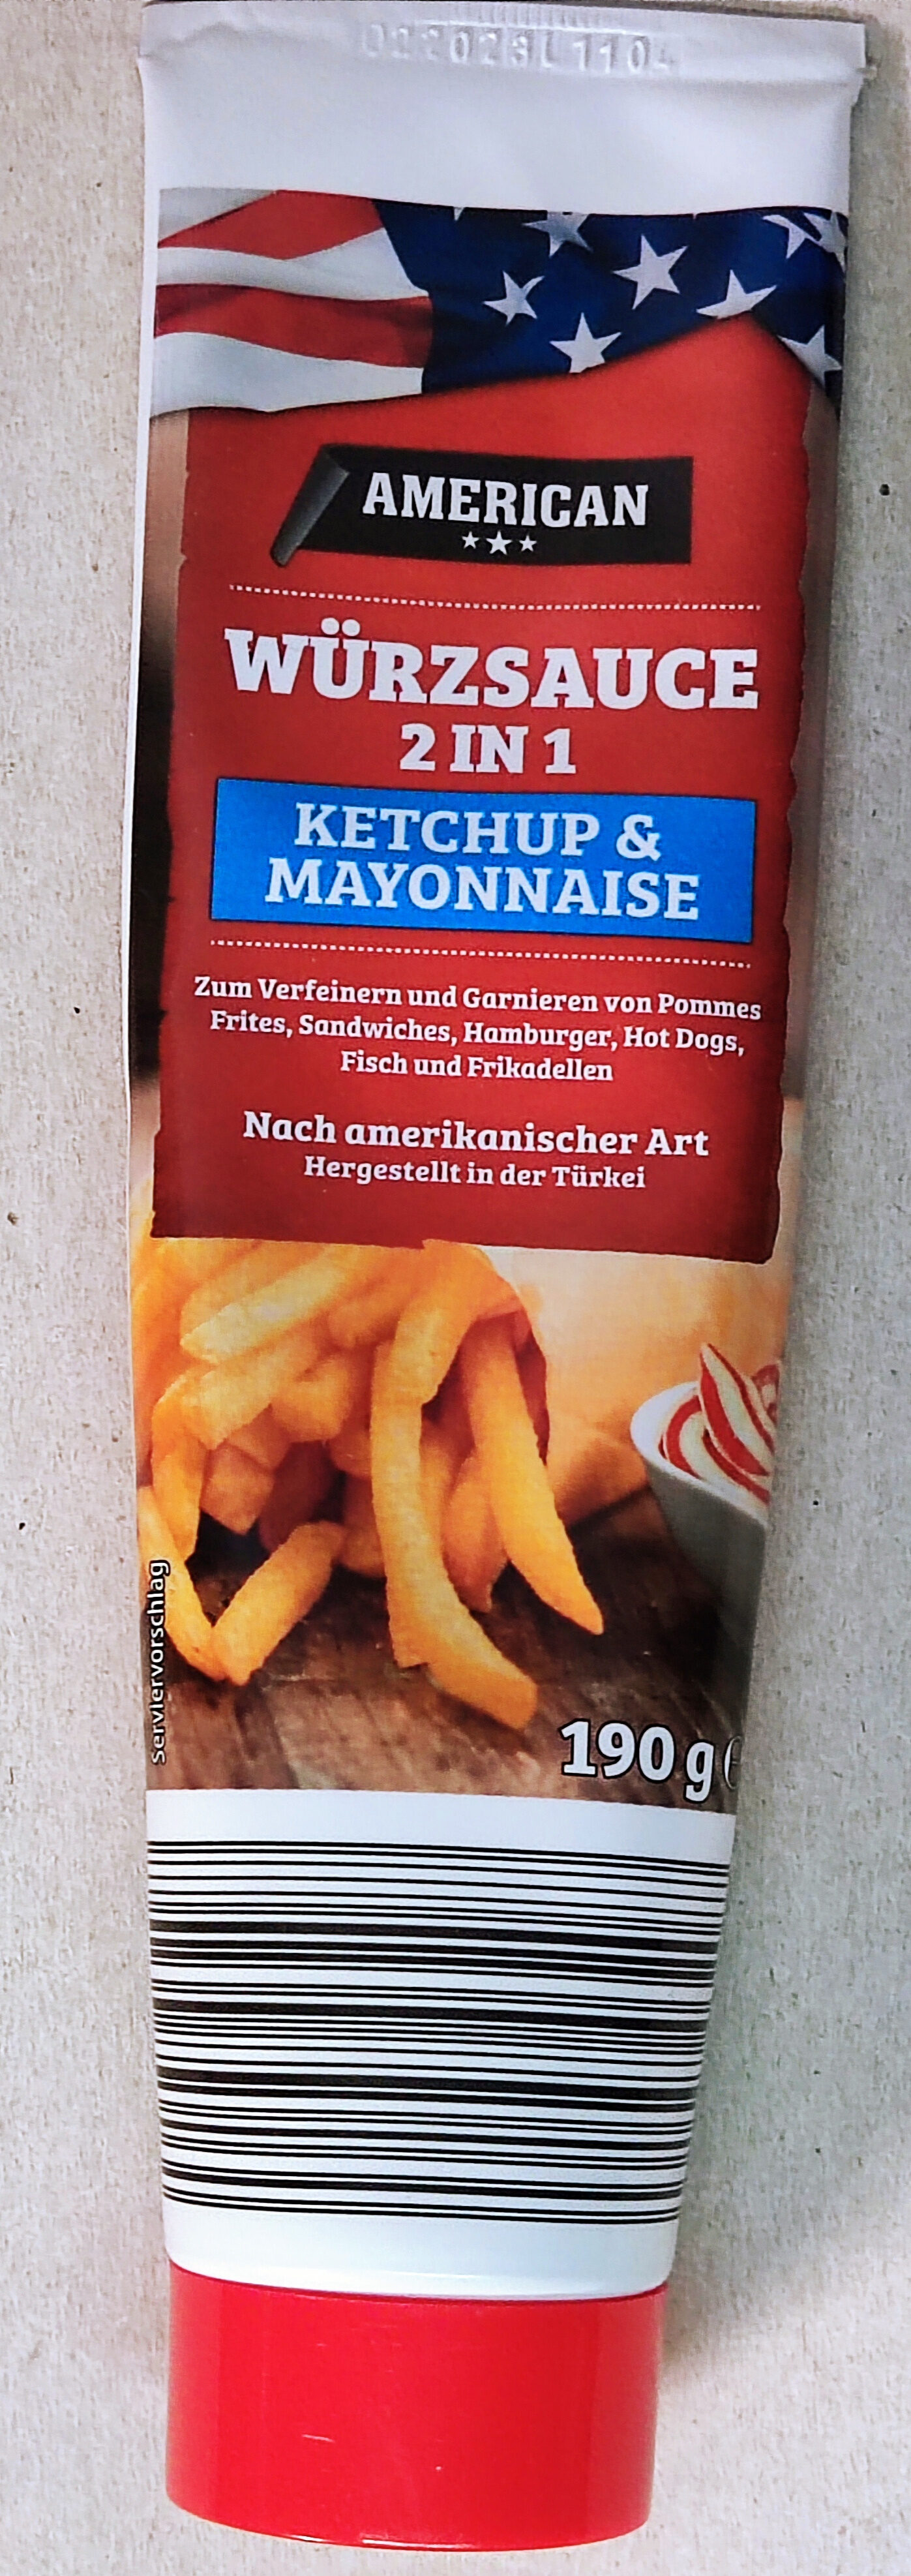 Würzsauce 2 in 1 - Ketchup & Mayonnaise - Produkt